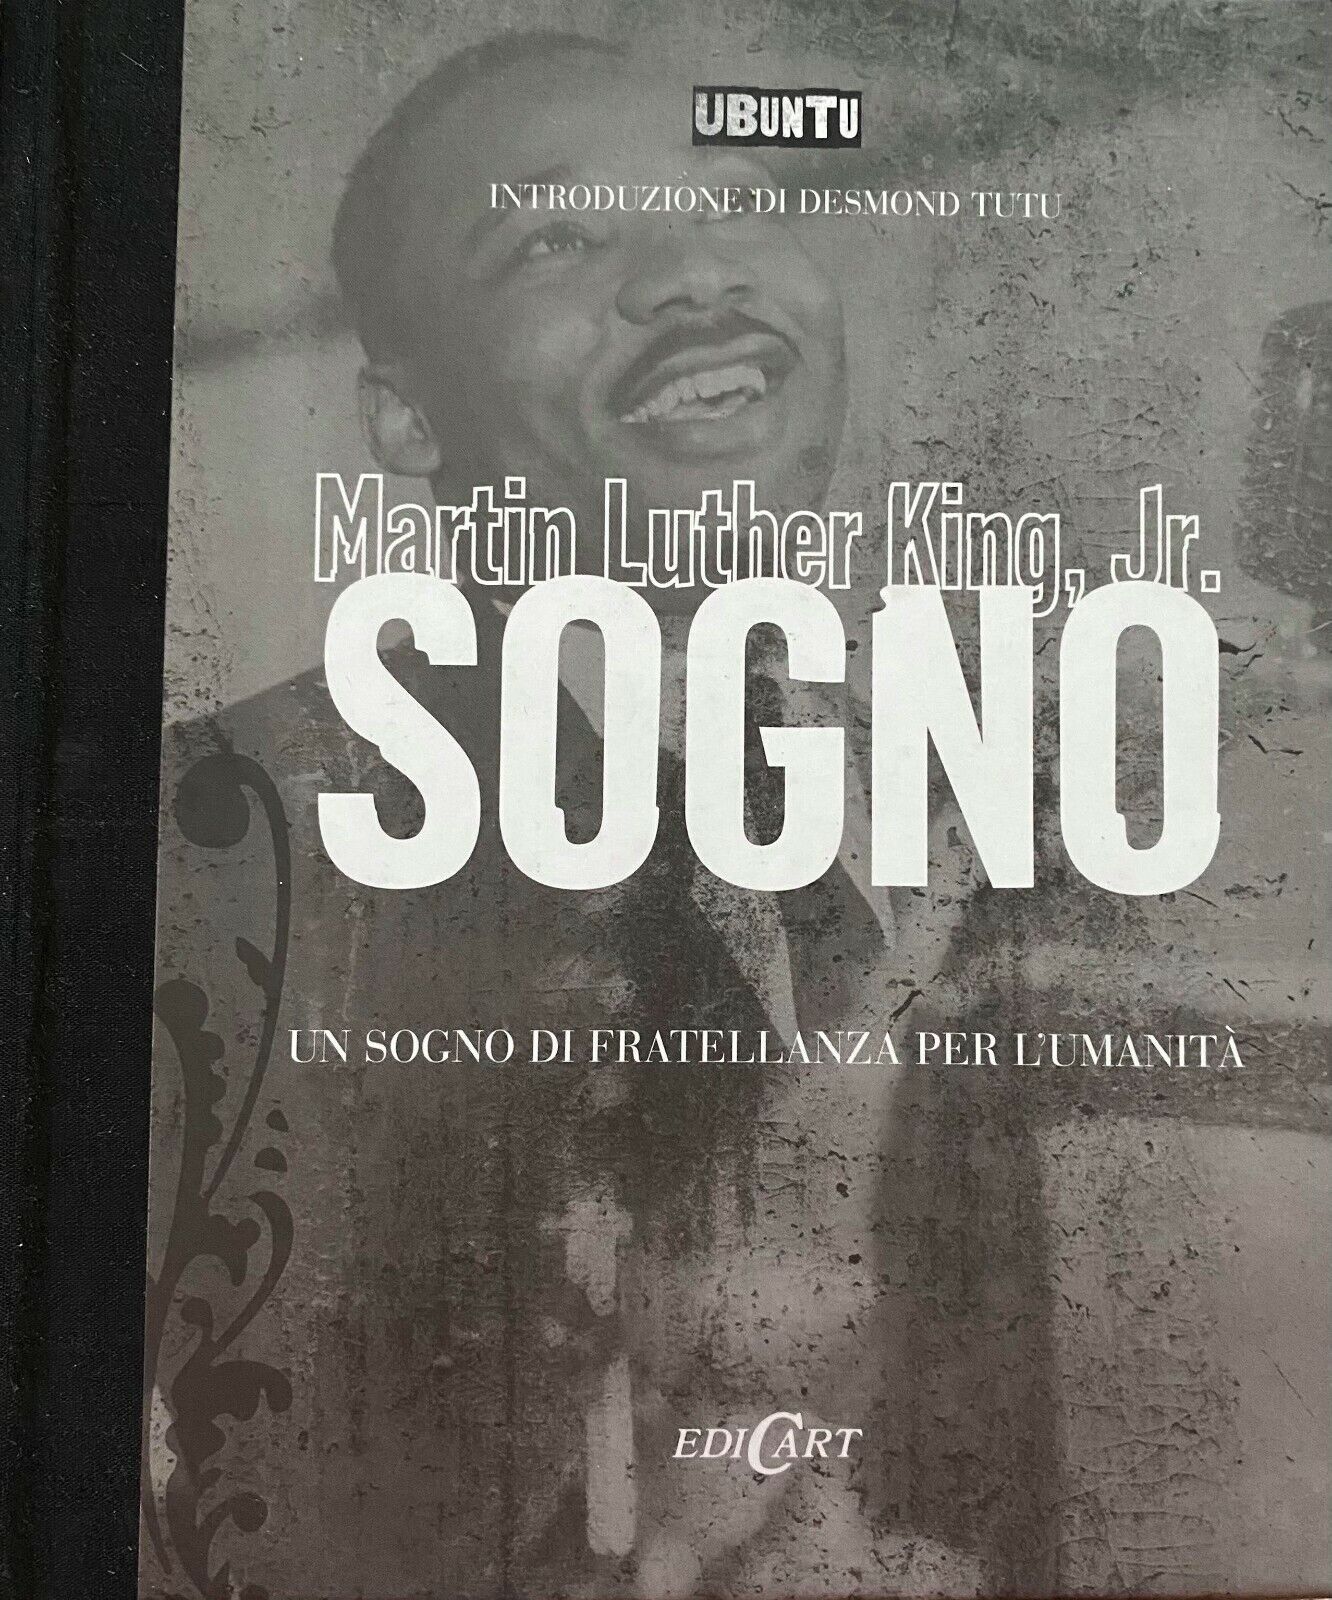 Sogno - AAVV - Edicart - 2007 - M